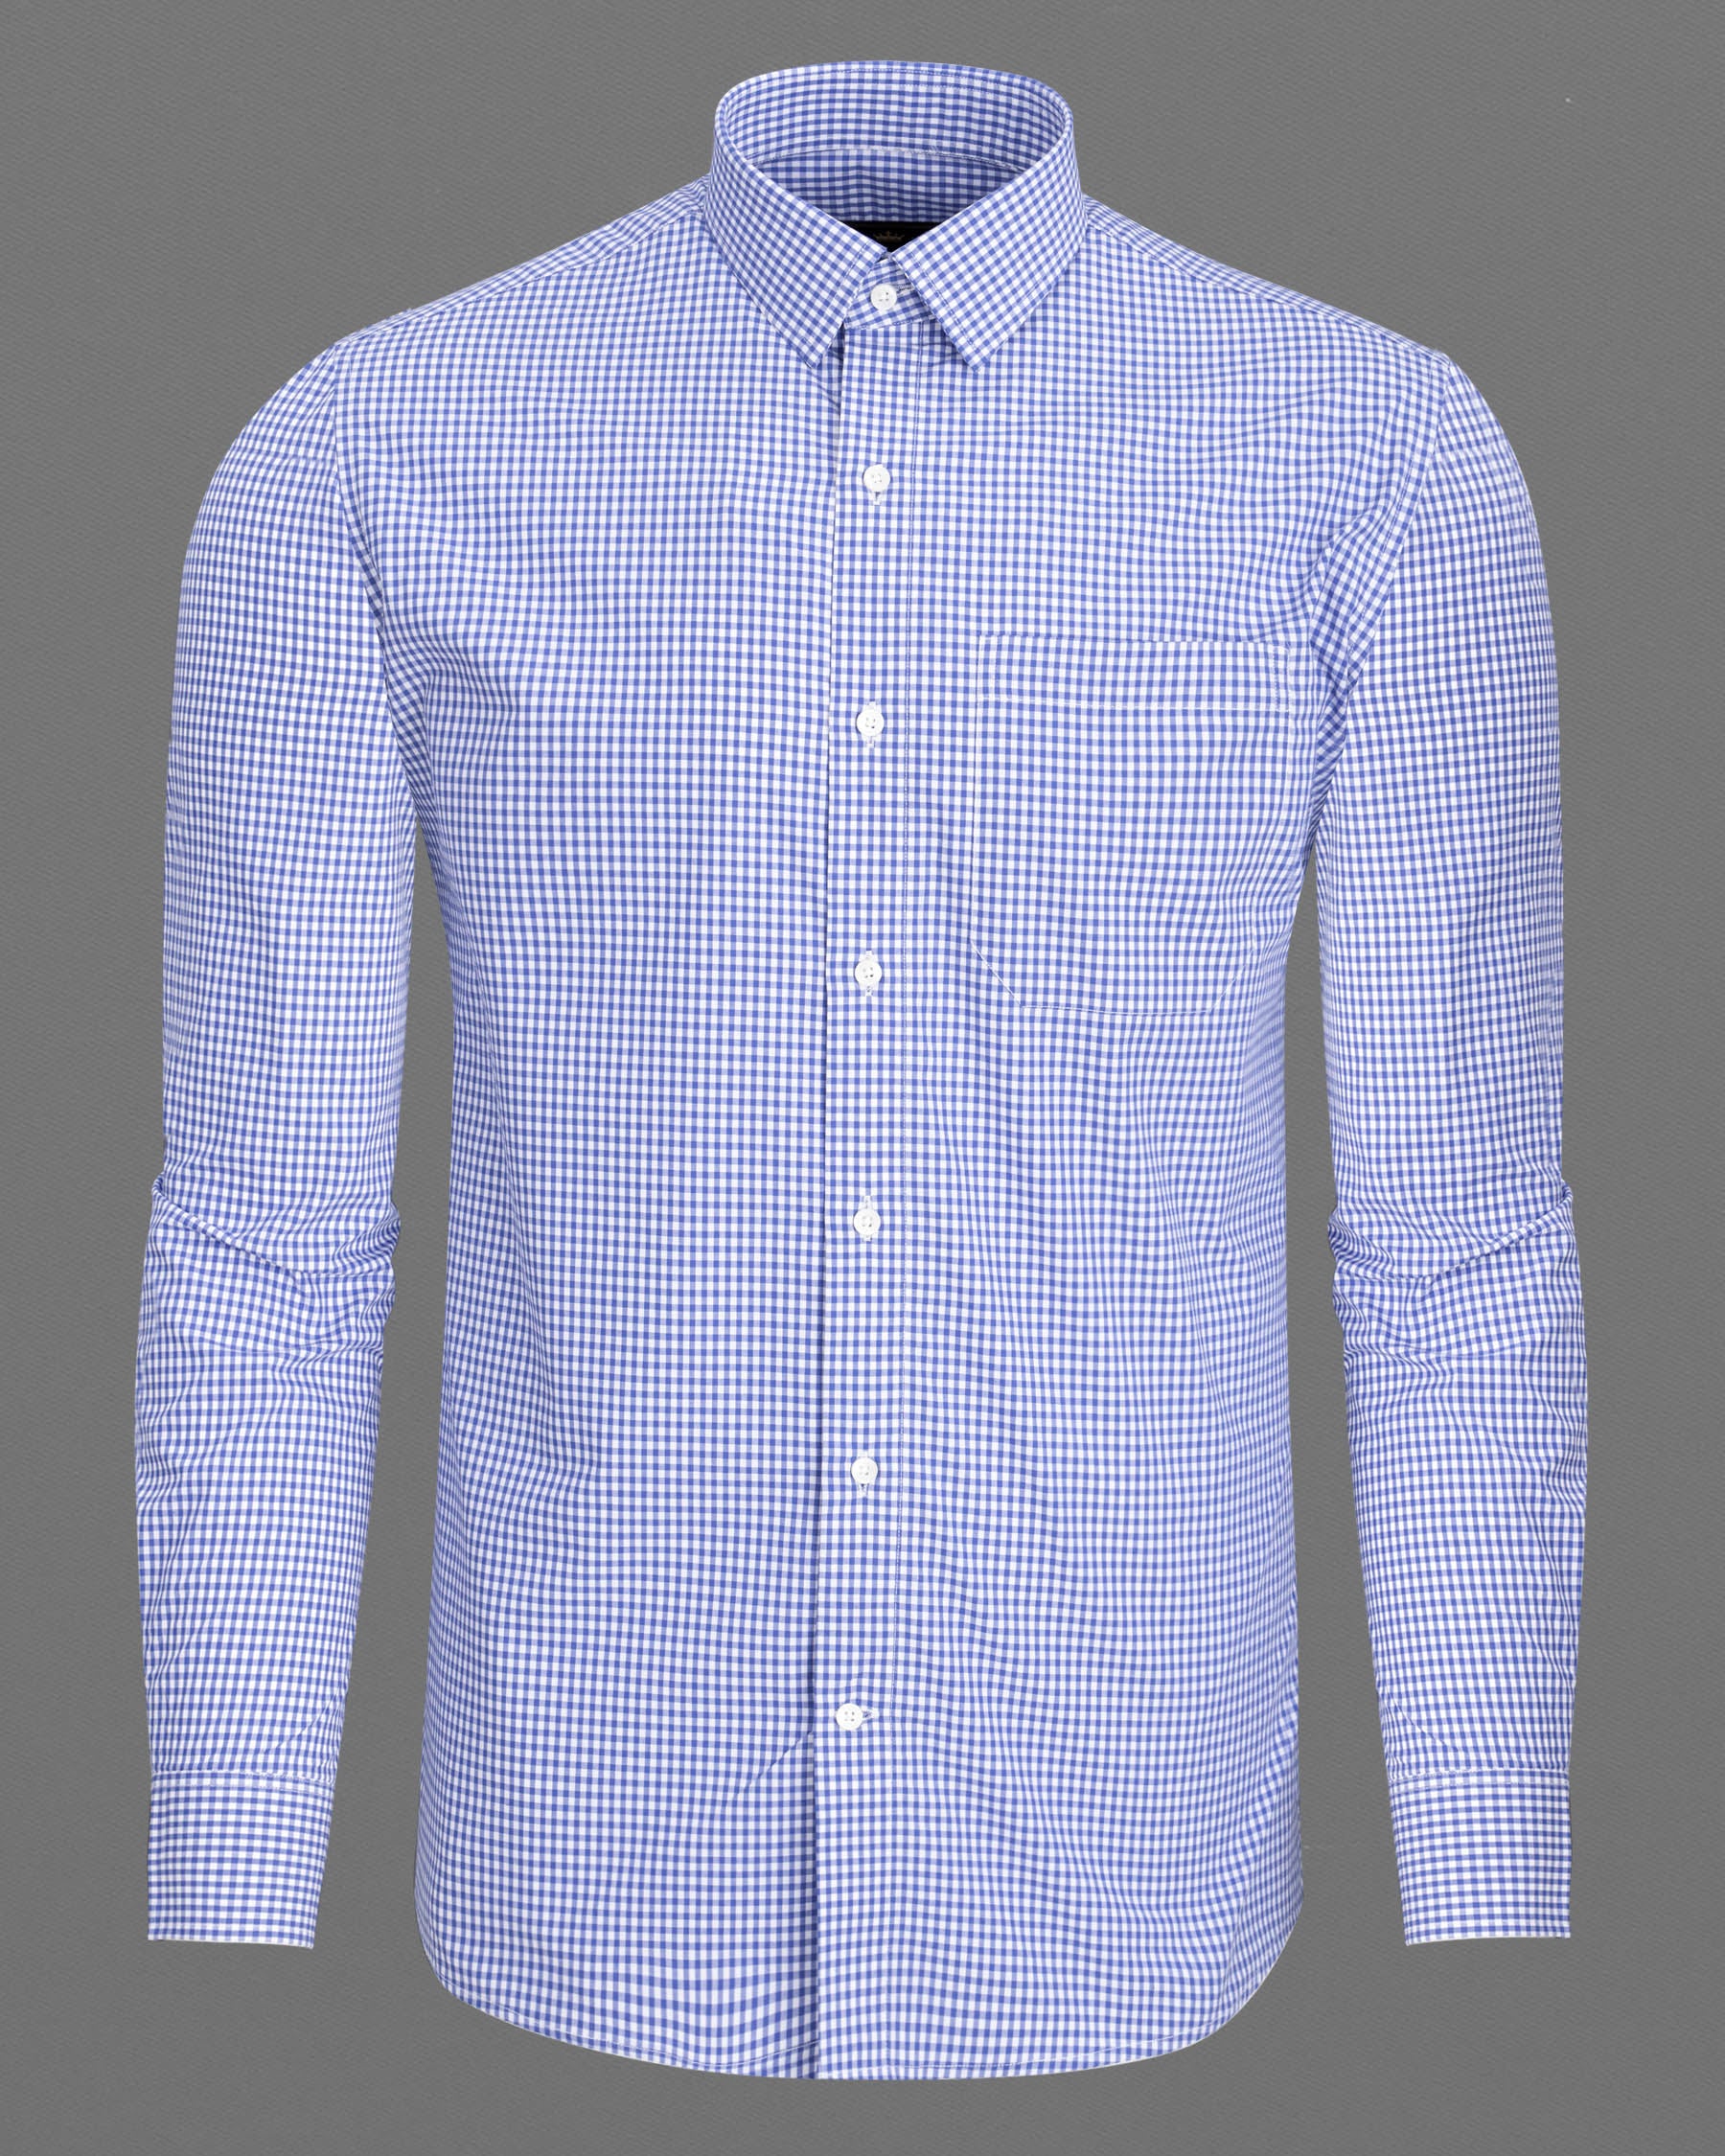 Portage Blue Checkered Premium Cotton Shirt 6934-38,6934-38,6934-39,6934-39,6934-40,6934-40,6934-42,6934-42,6934-44,6934-44,6934-46,6934-46,6934-48,6934-48,6934-50,6934-50,6934-52,6934-52